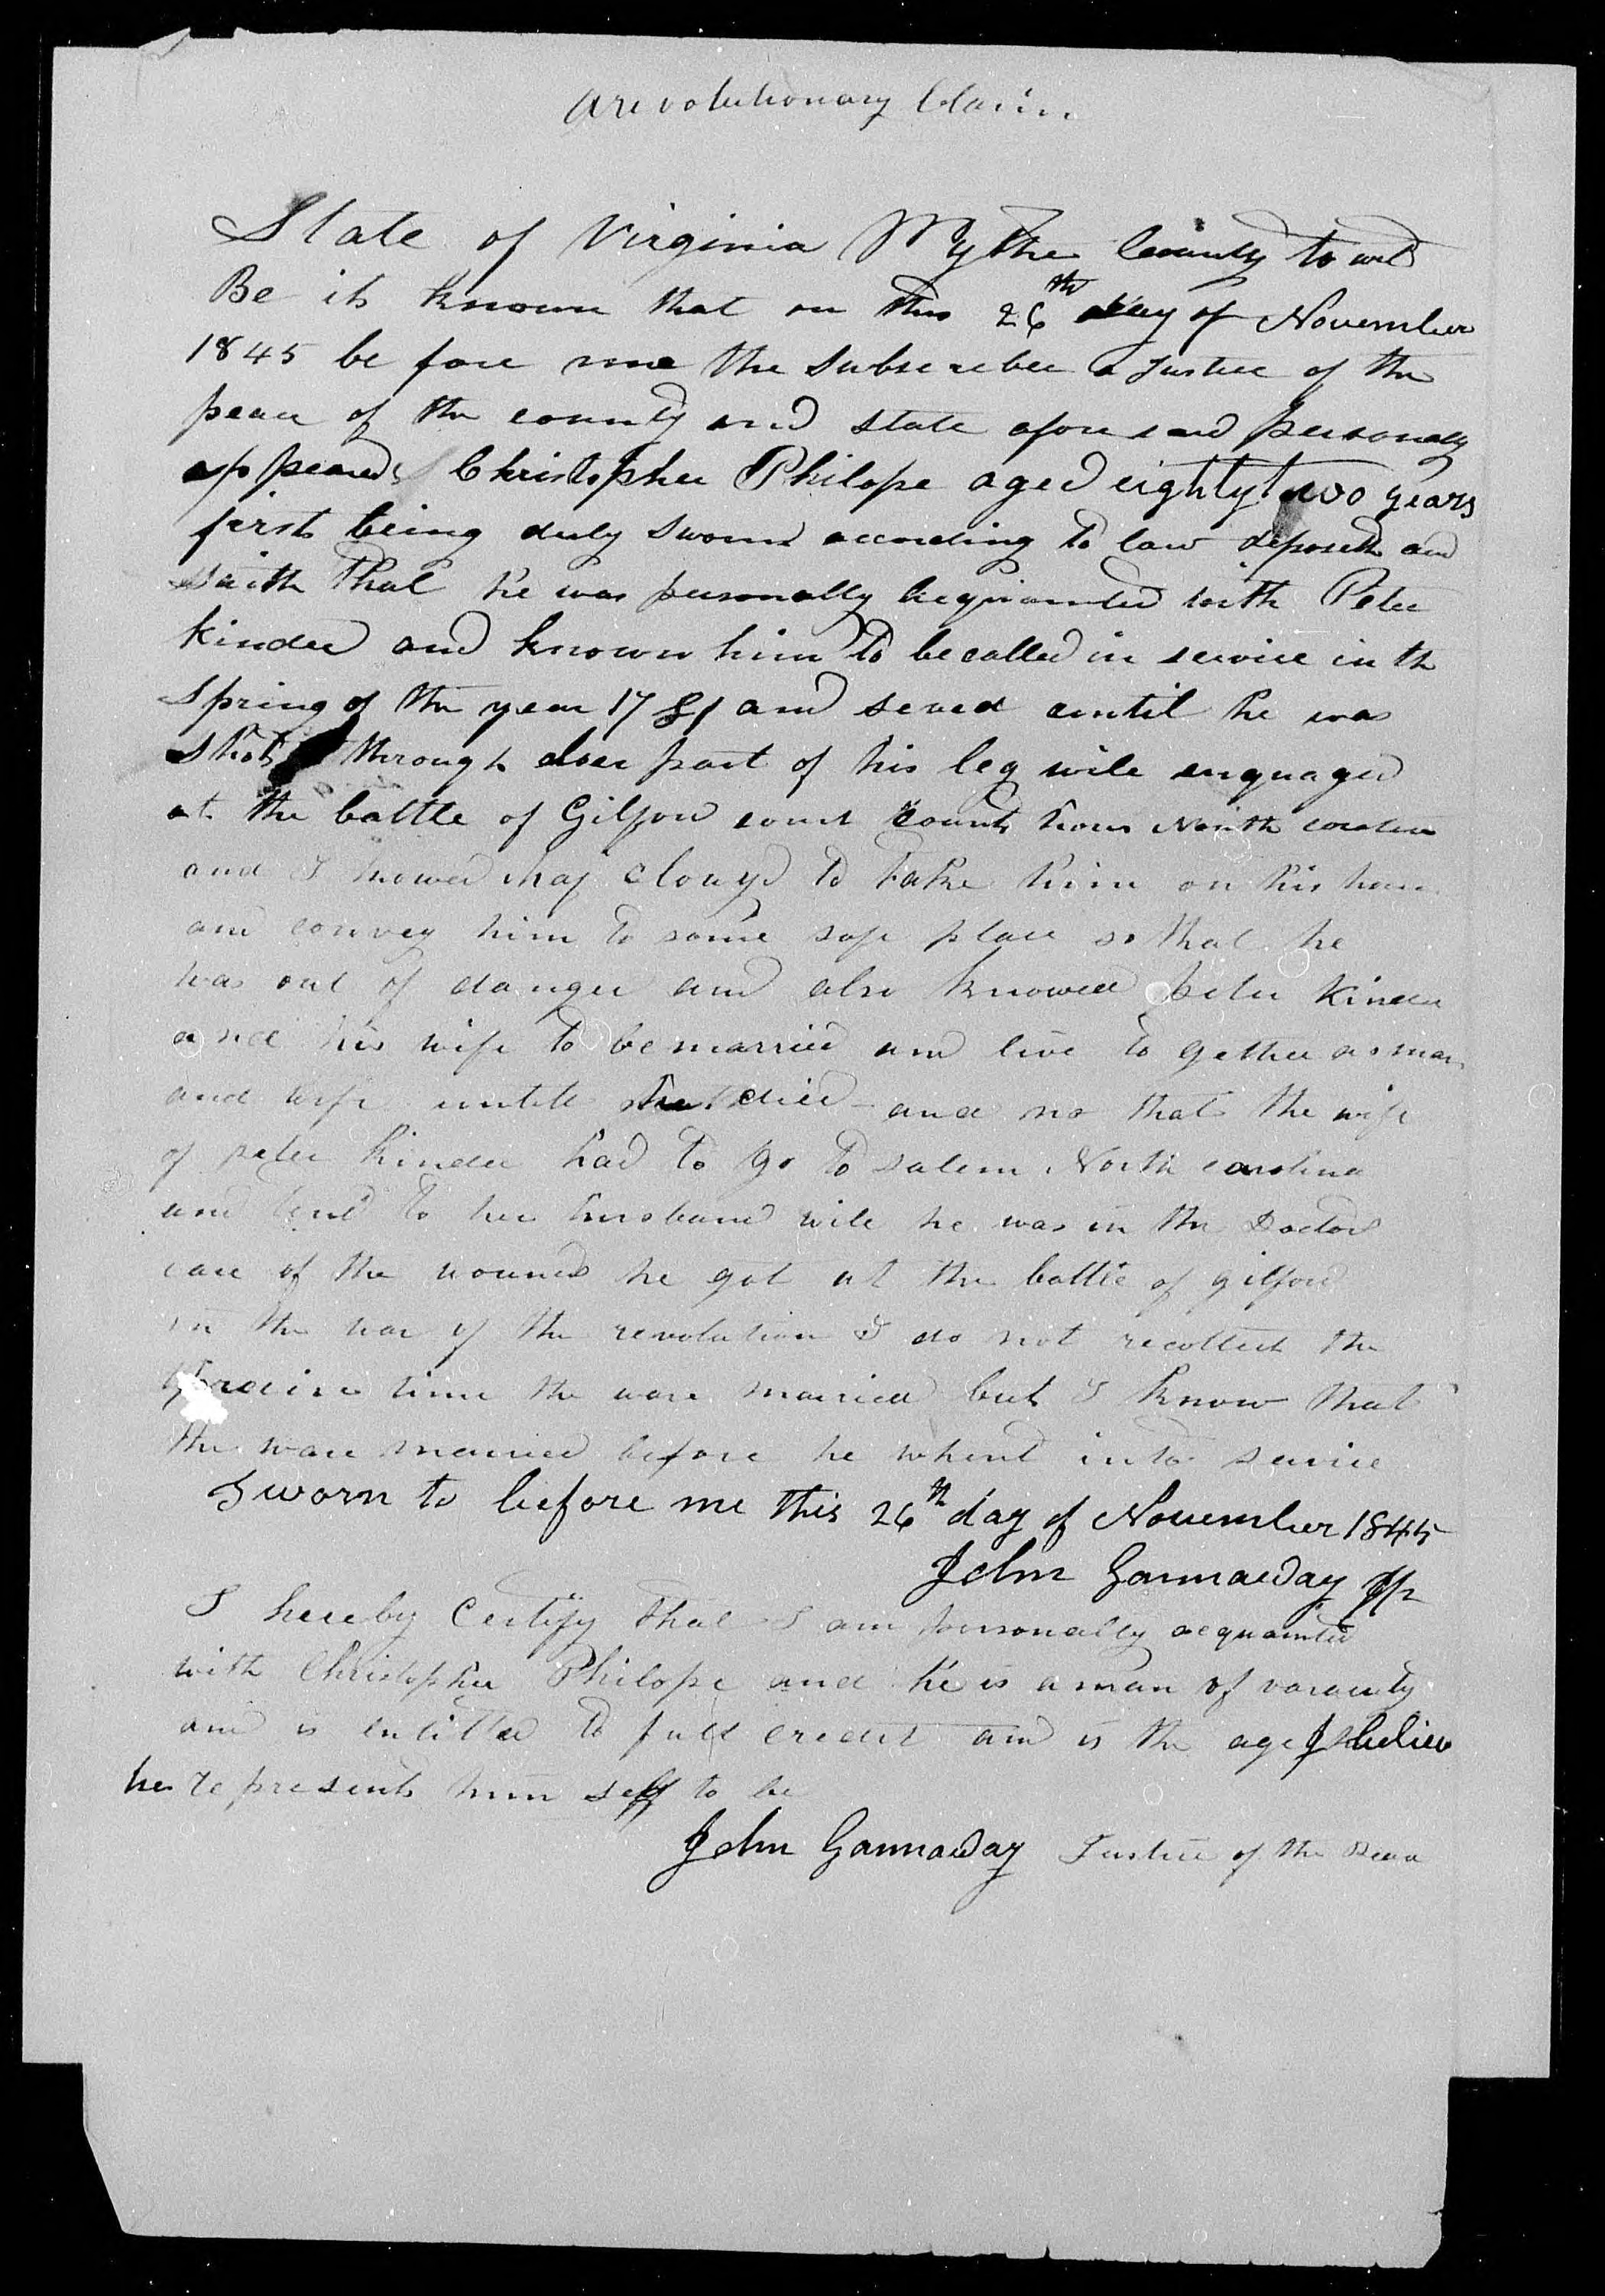 Affidavit of Christopher Philope in support of a Pension Claim for Peter and Margaret Kinder, 26 November 1845, page 1